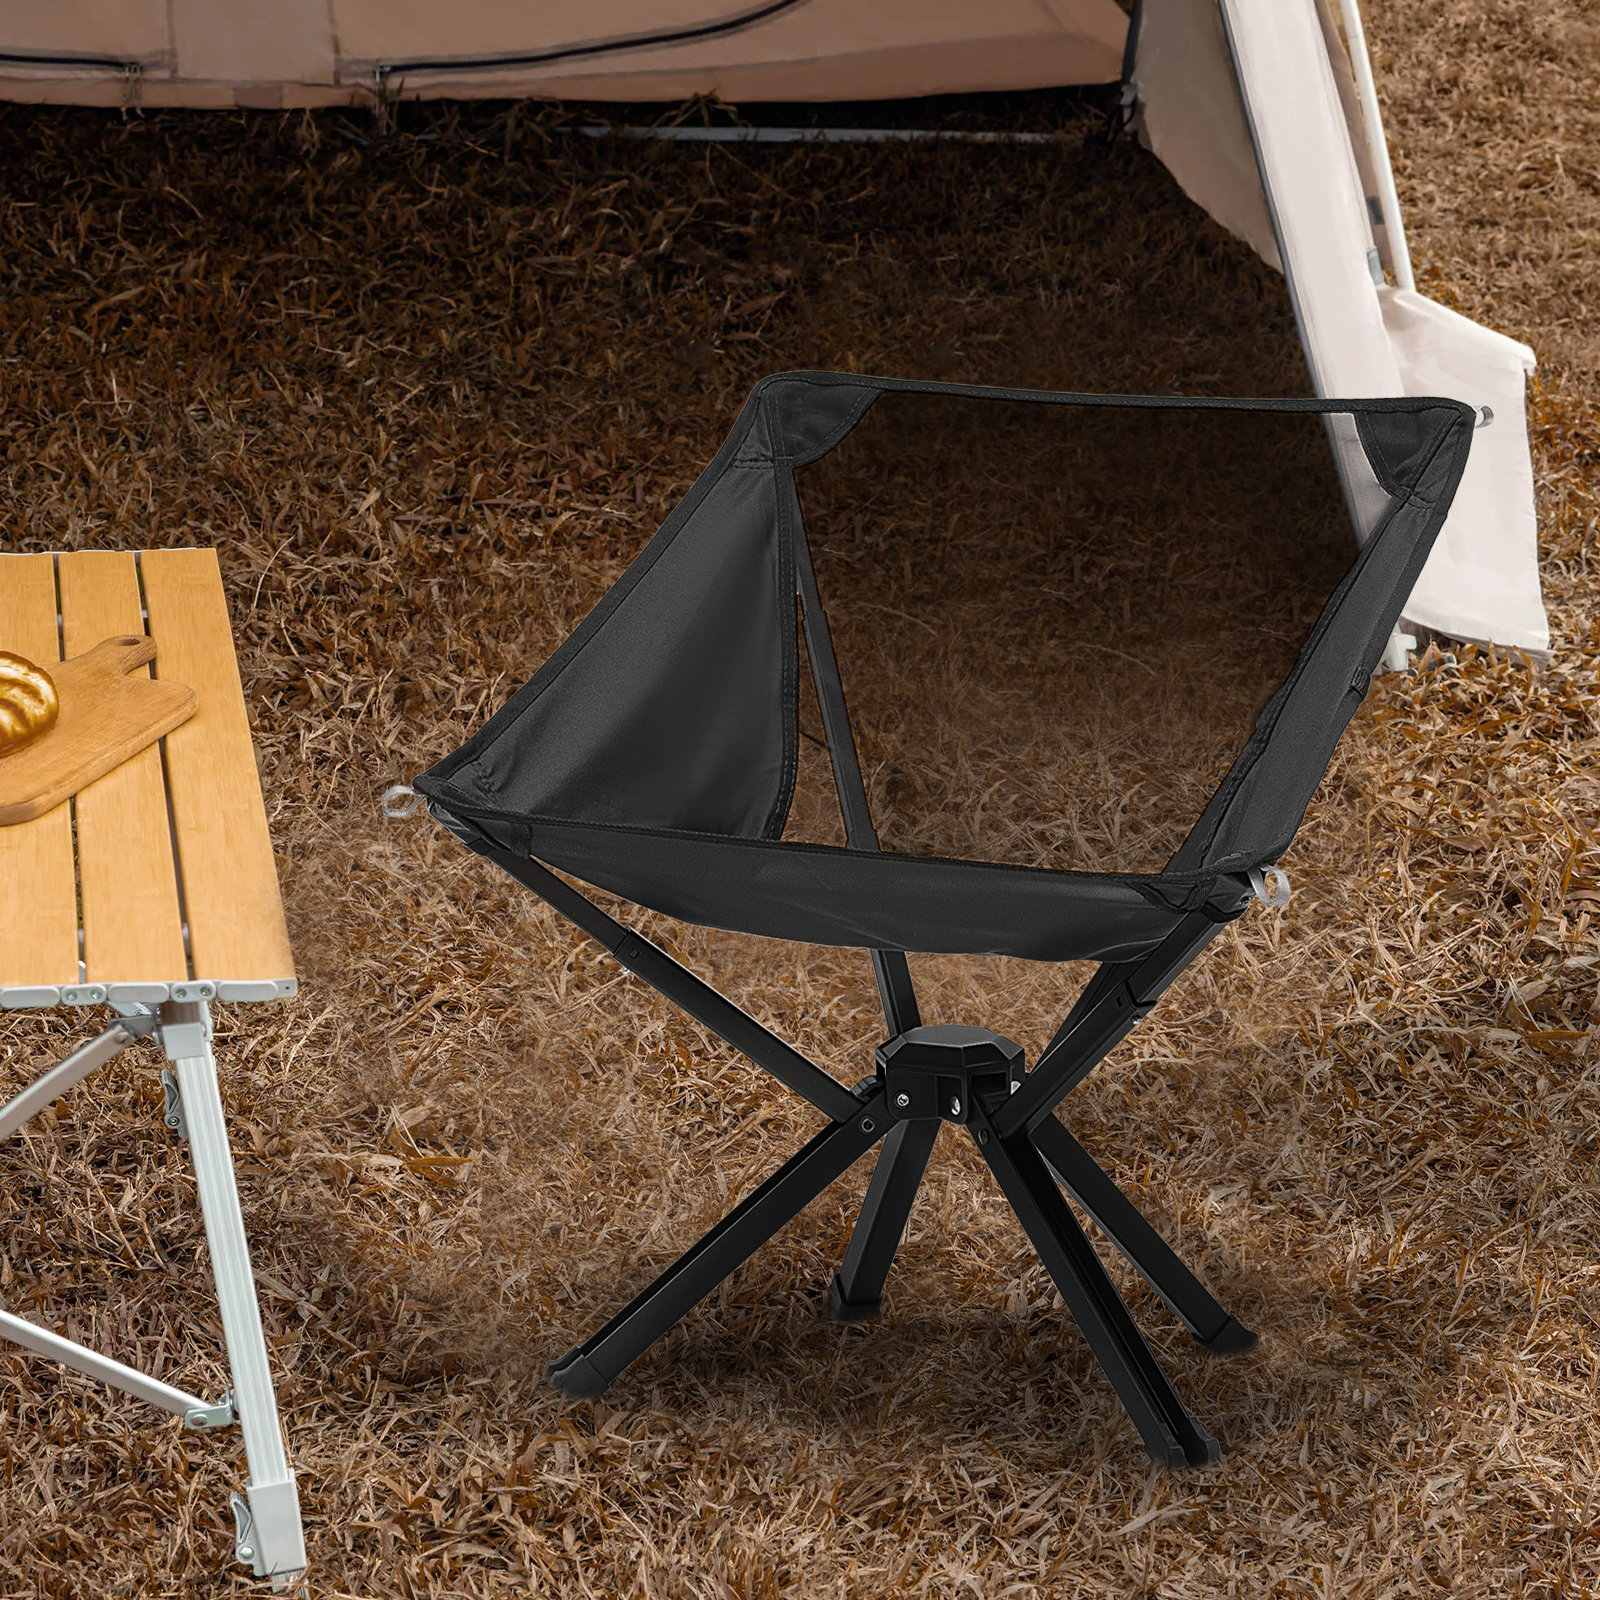 Compact Folding Chair, Fishing Chairs Folding Oxford Cloth Cushion